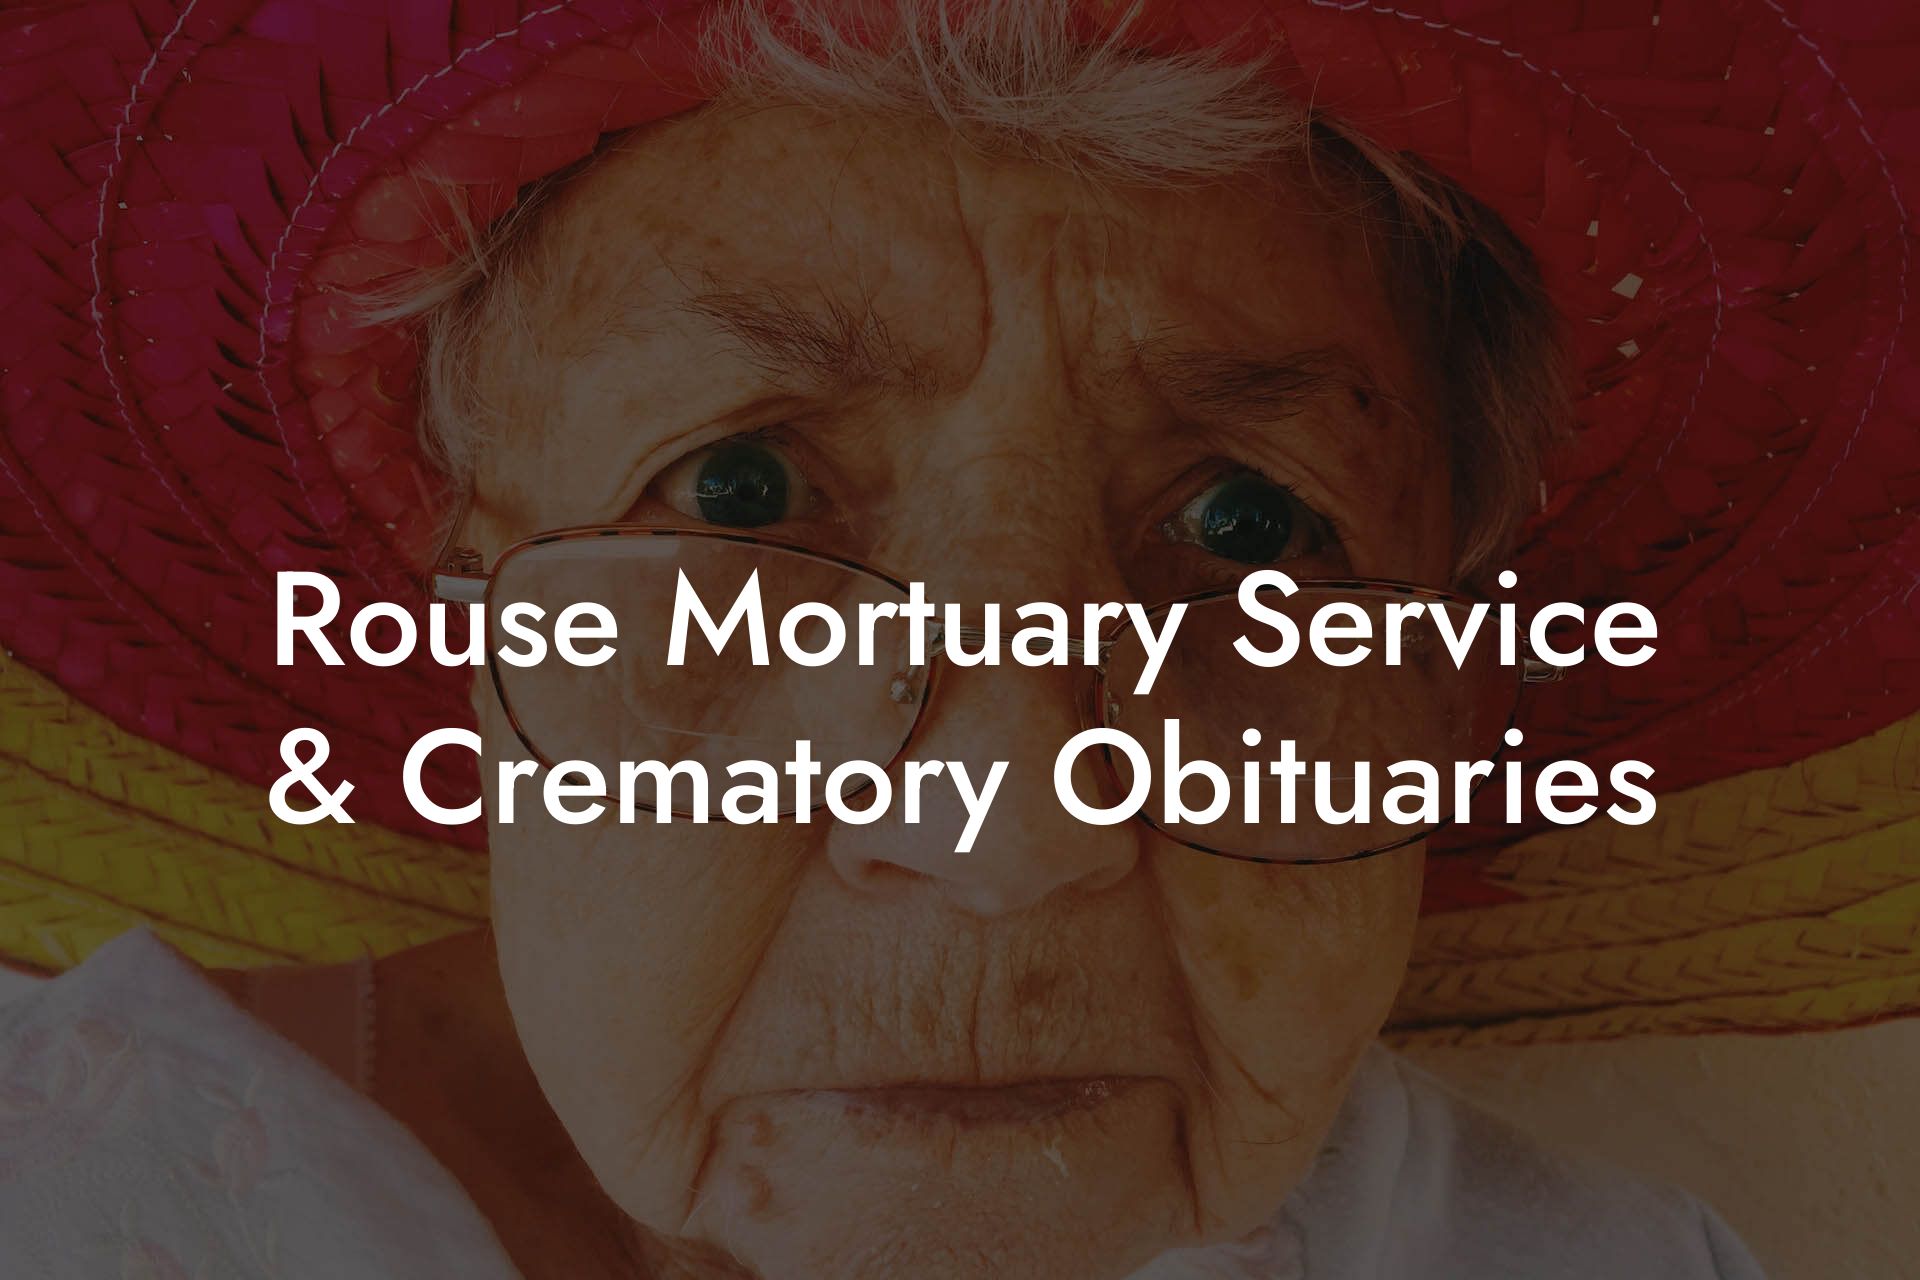 Rouse Mortuary Service & Crematory Obituaries